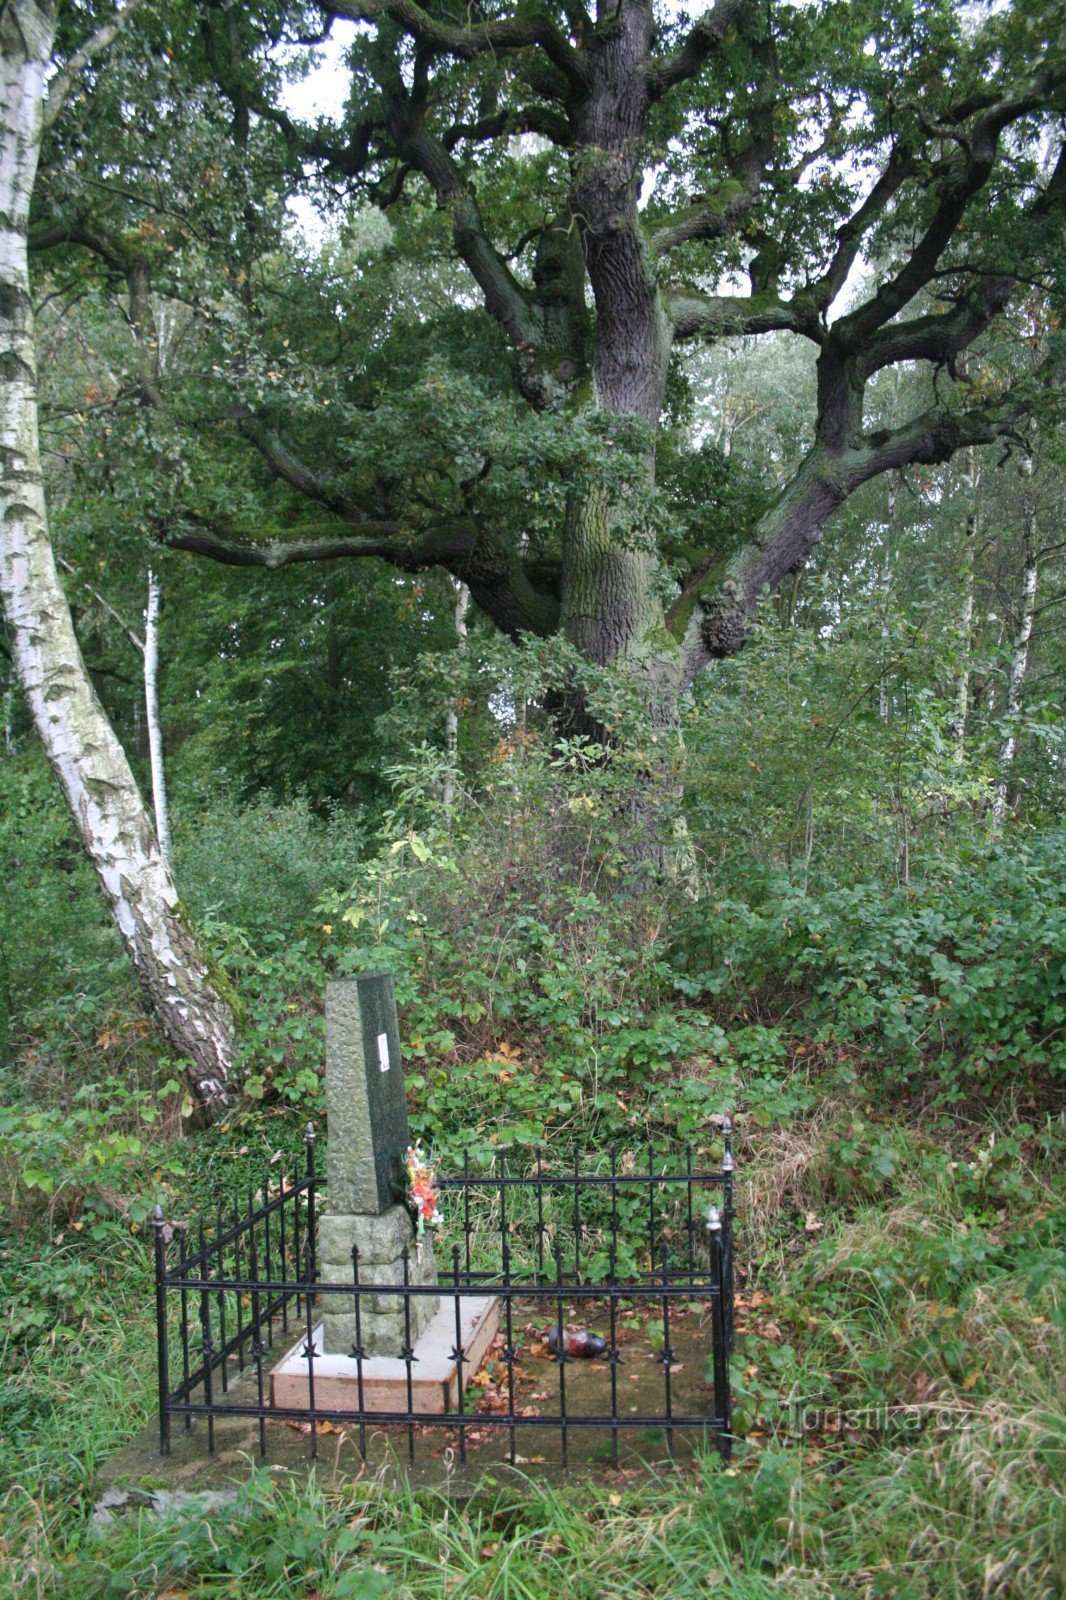 One of two memorial oak trees